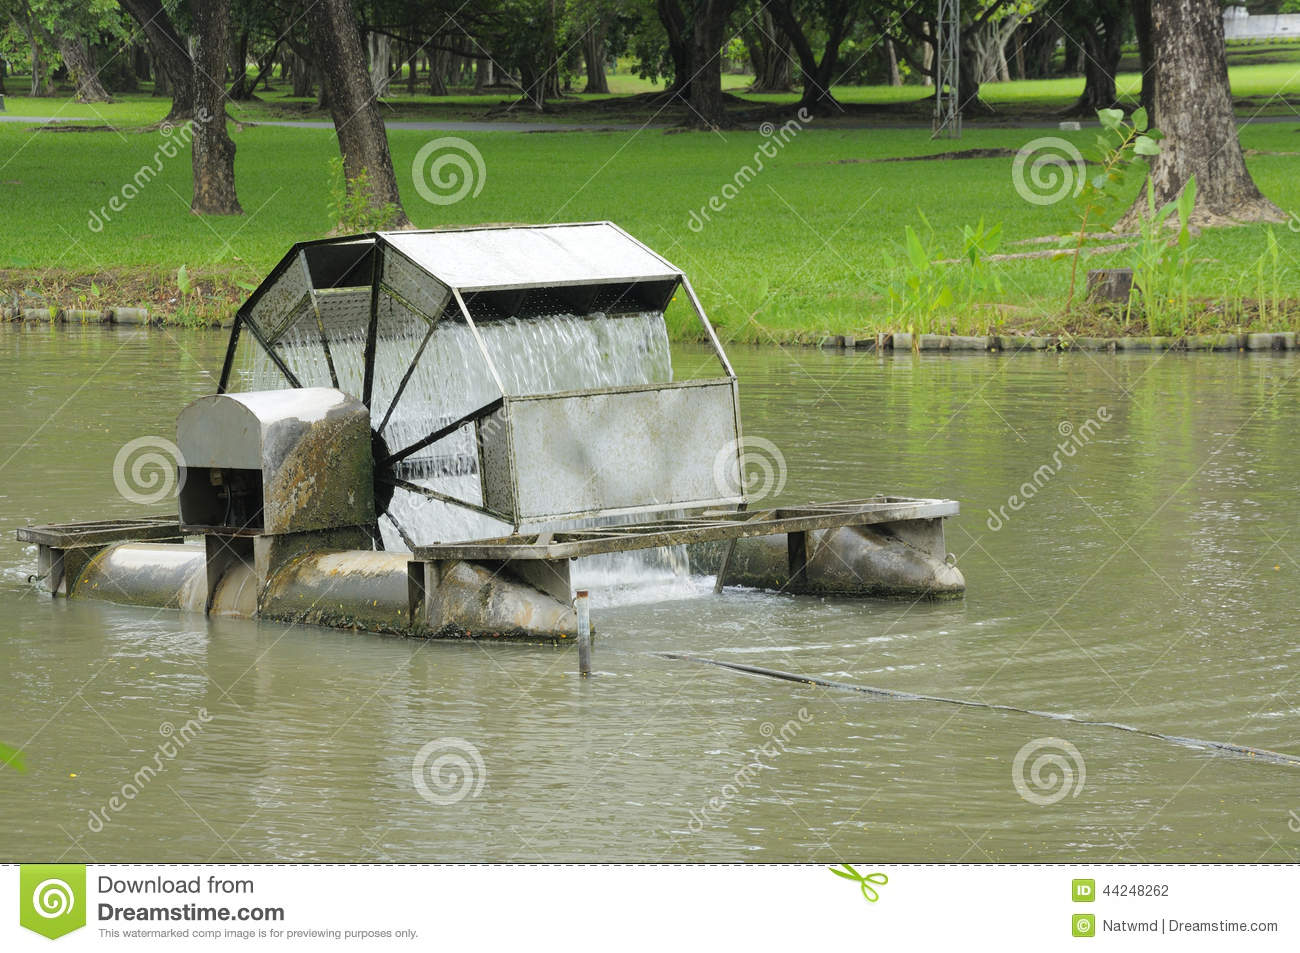 water-turbine-floating-lake-park-picture-44248262.jpg